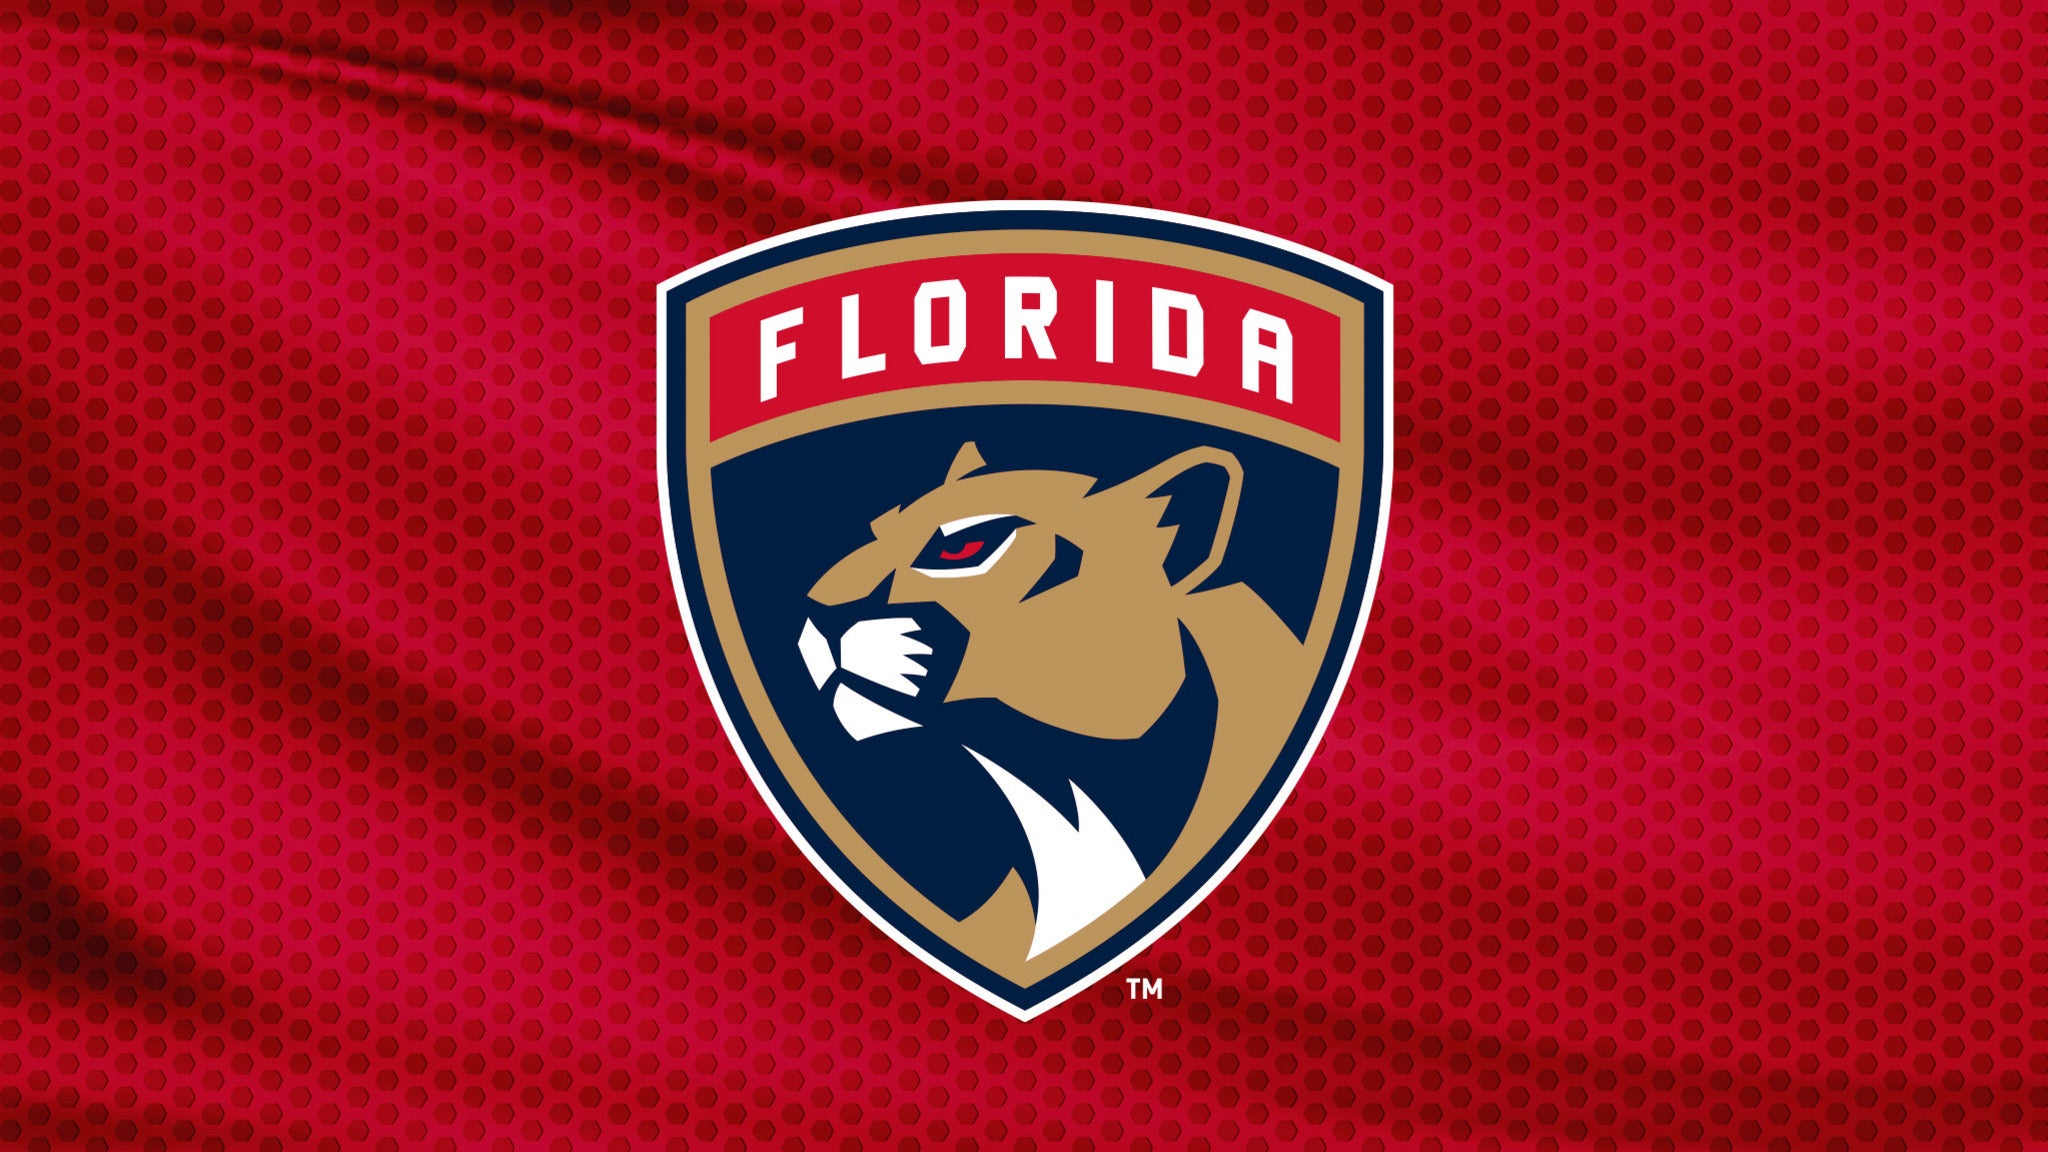 Florida Panthers vs. Buffalo Sabres at FLA Live Arena - Sunrise, FL 33323